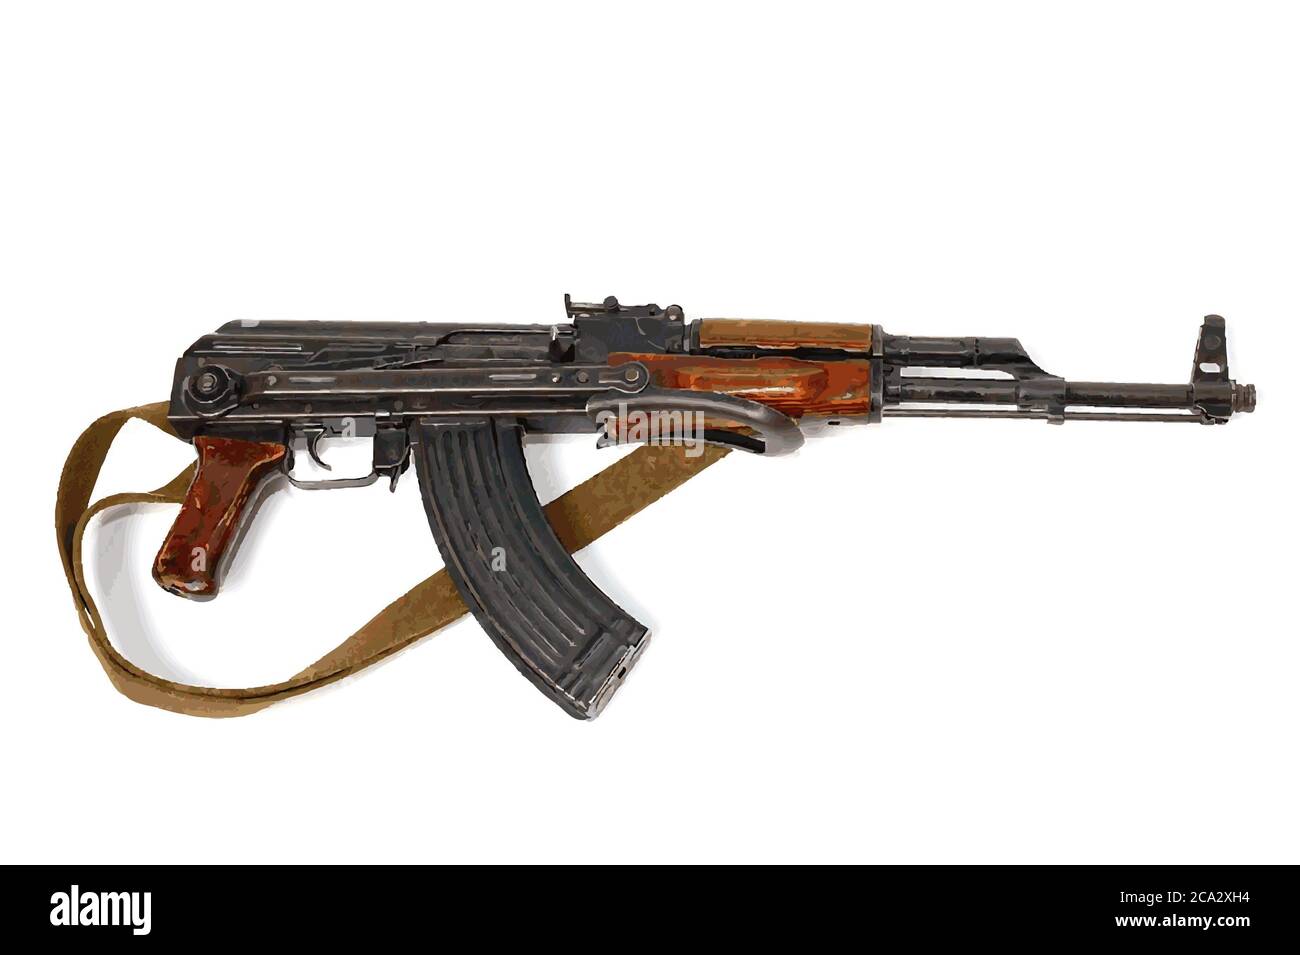 weapon is an automat Kalashnikov vector illustration isolated on white background. Stock Photo